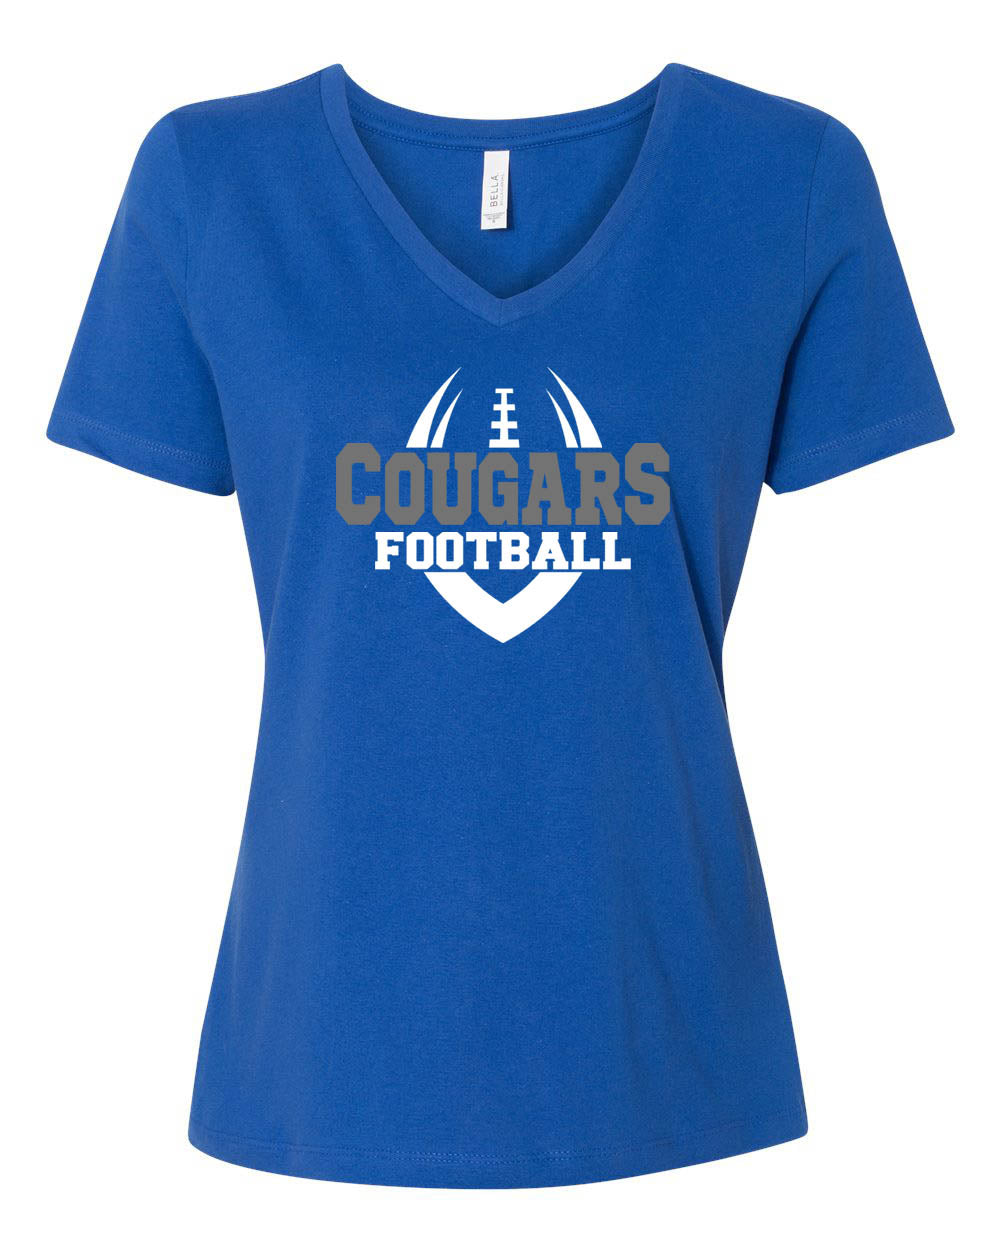 Cougars Football Design 2 V-neck T-Shirt